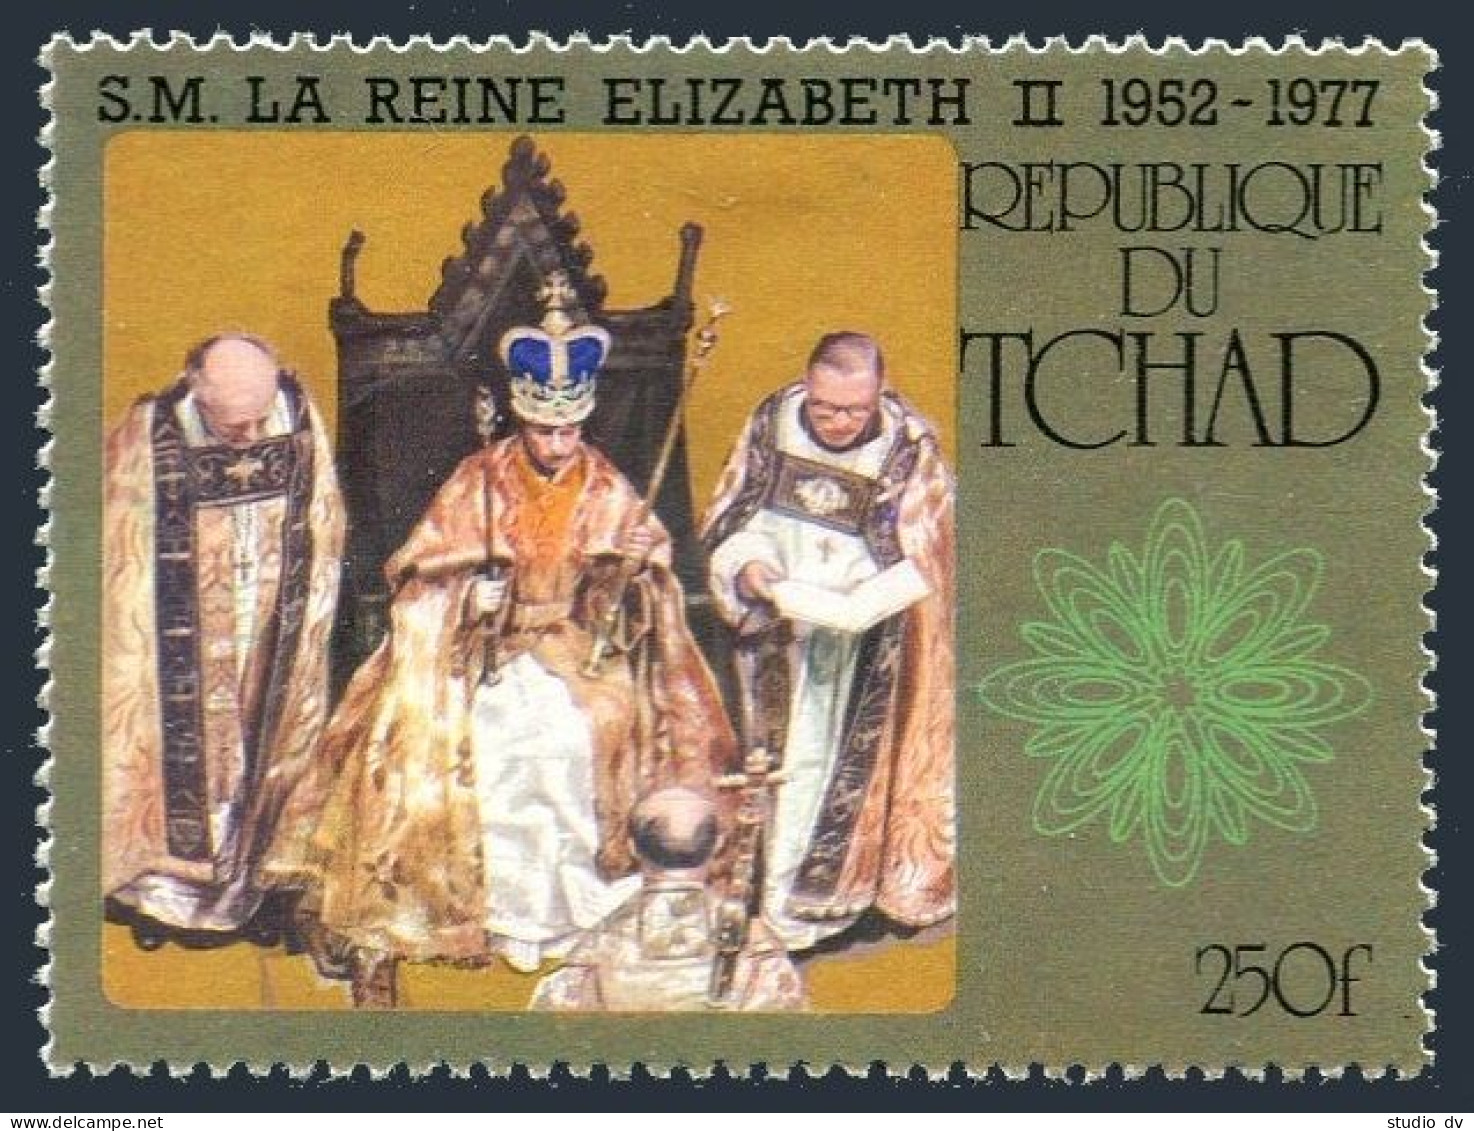 Chad 328,329 Sheet,MNH. Mi 782,Bl.69. Reign Of Queen Elizabeth II,25th Ann.1977. - Chad (1960-...)